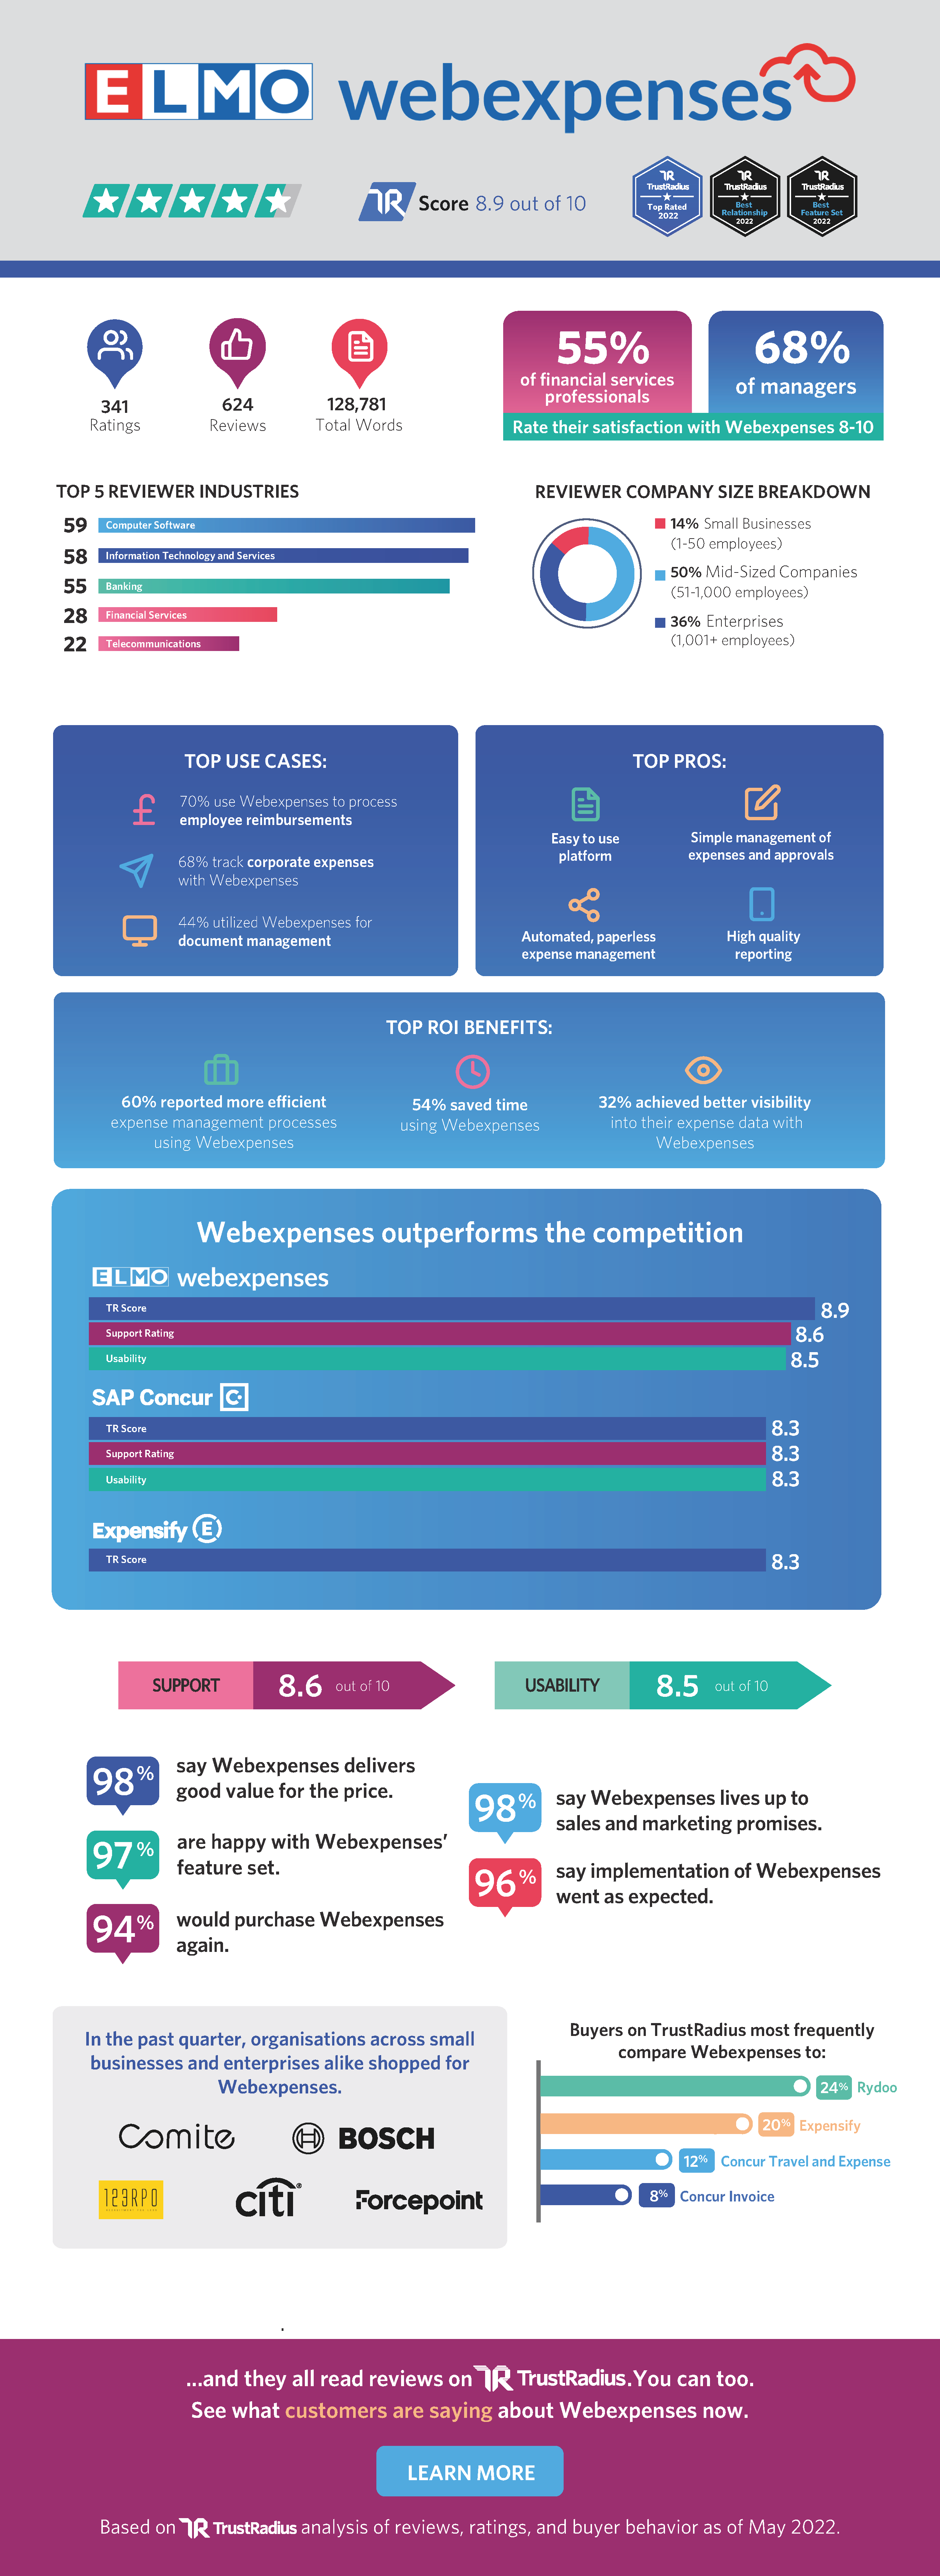 Webexpenses versus Competitor Infographic 